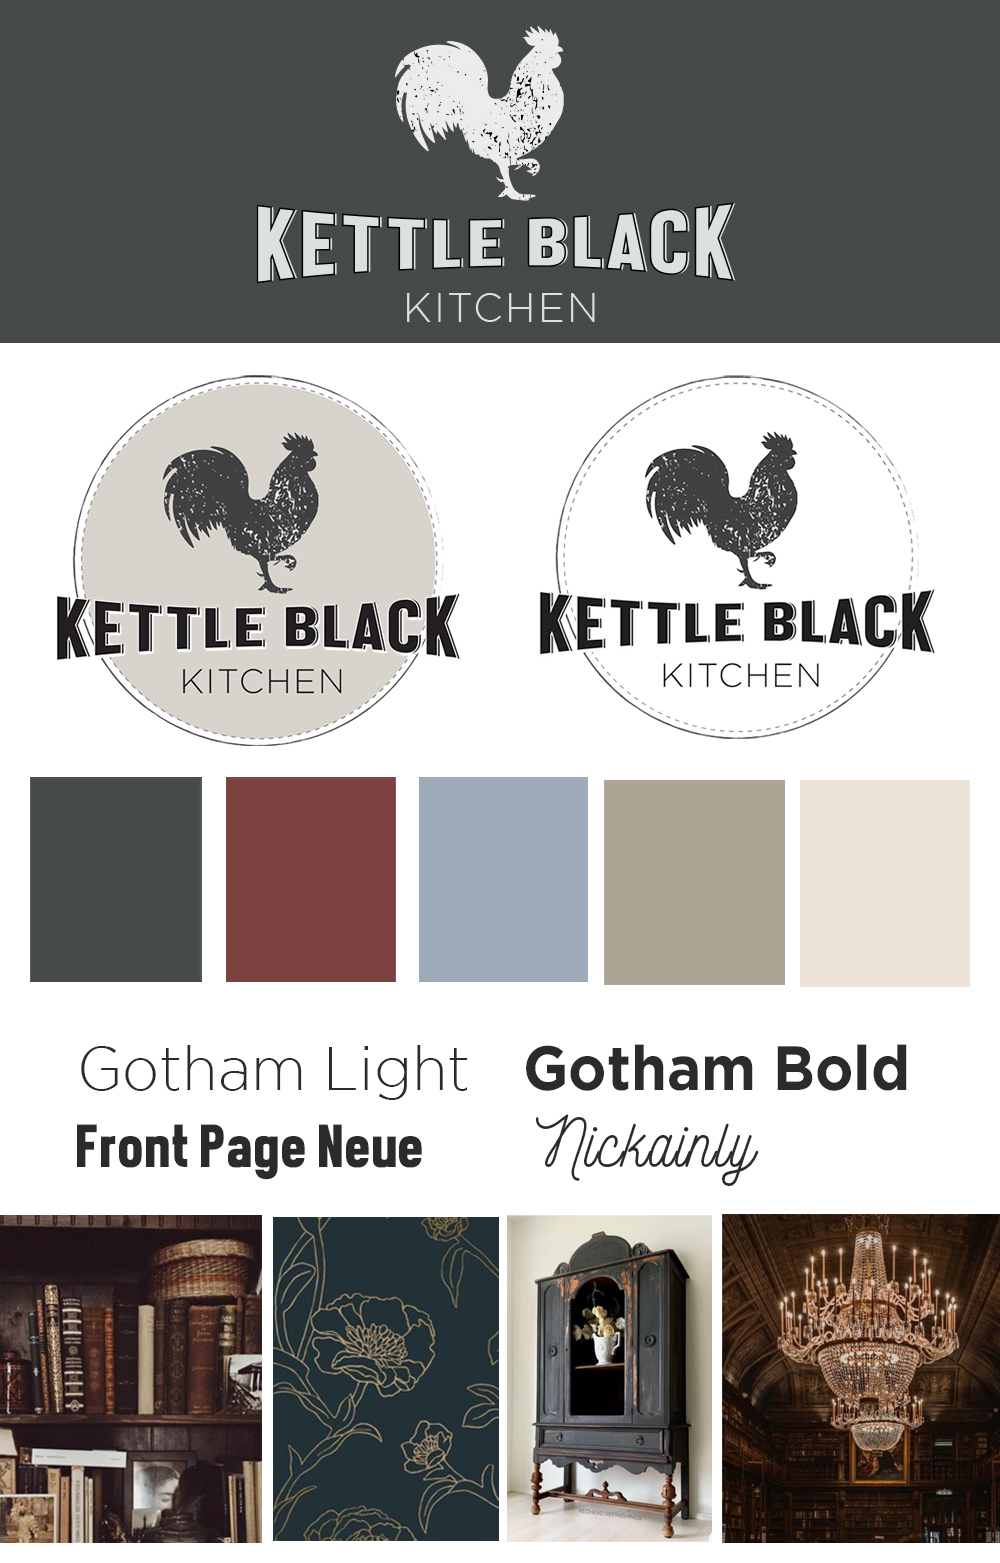 Kettle Black Kitchen Branding and Logo Design